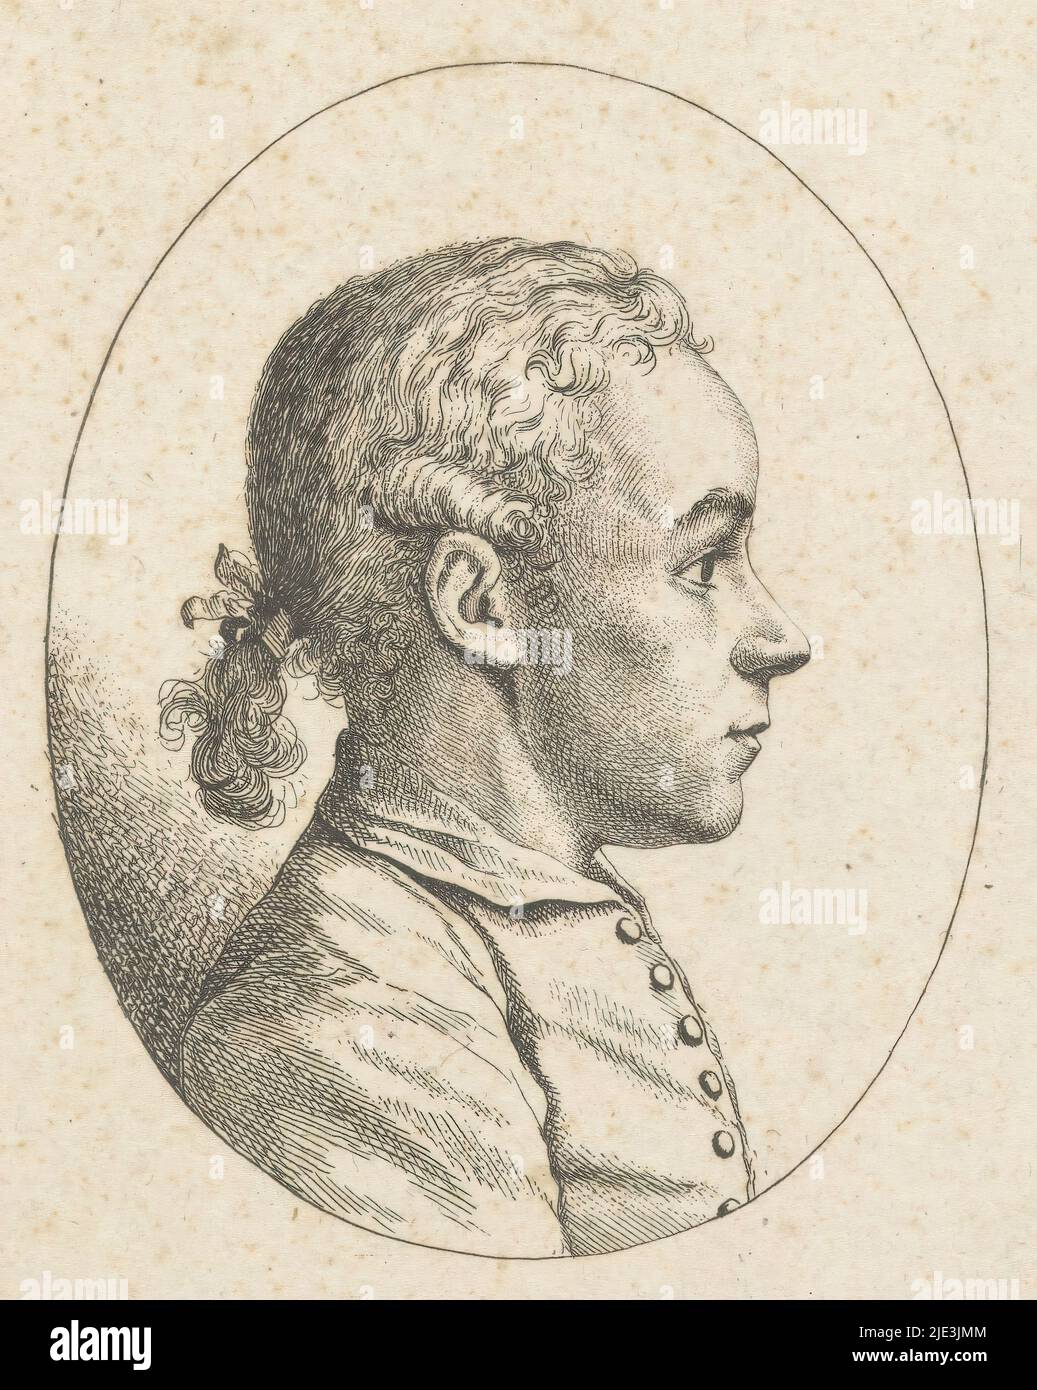 Ritratto di Peter im Baumgarten, tipografia: Georg Friedrich Schmoll, Germania, 1700 - 1785, carta, incisione, altezza 122 mm x larghezza 109 mm Foto Stock